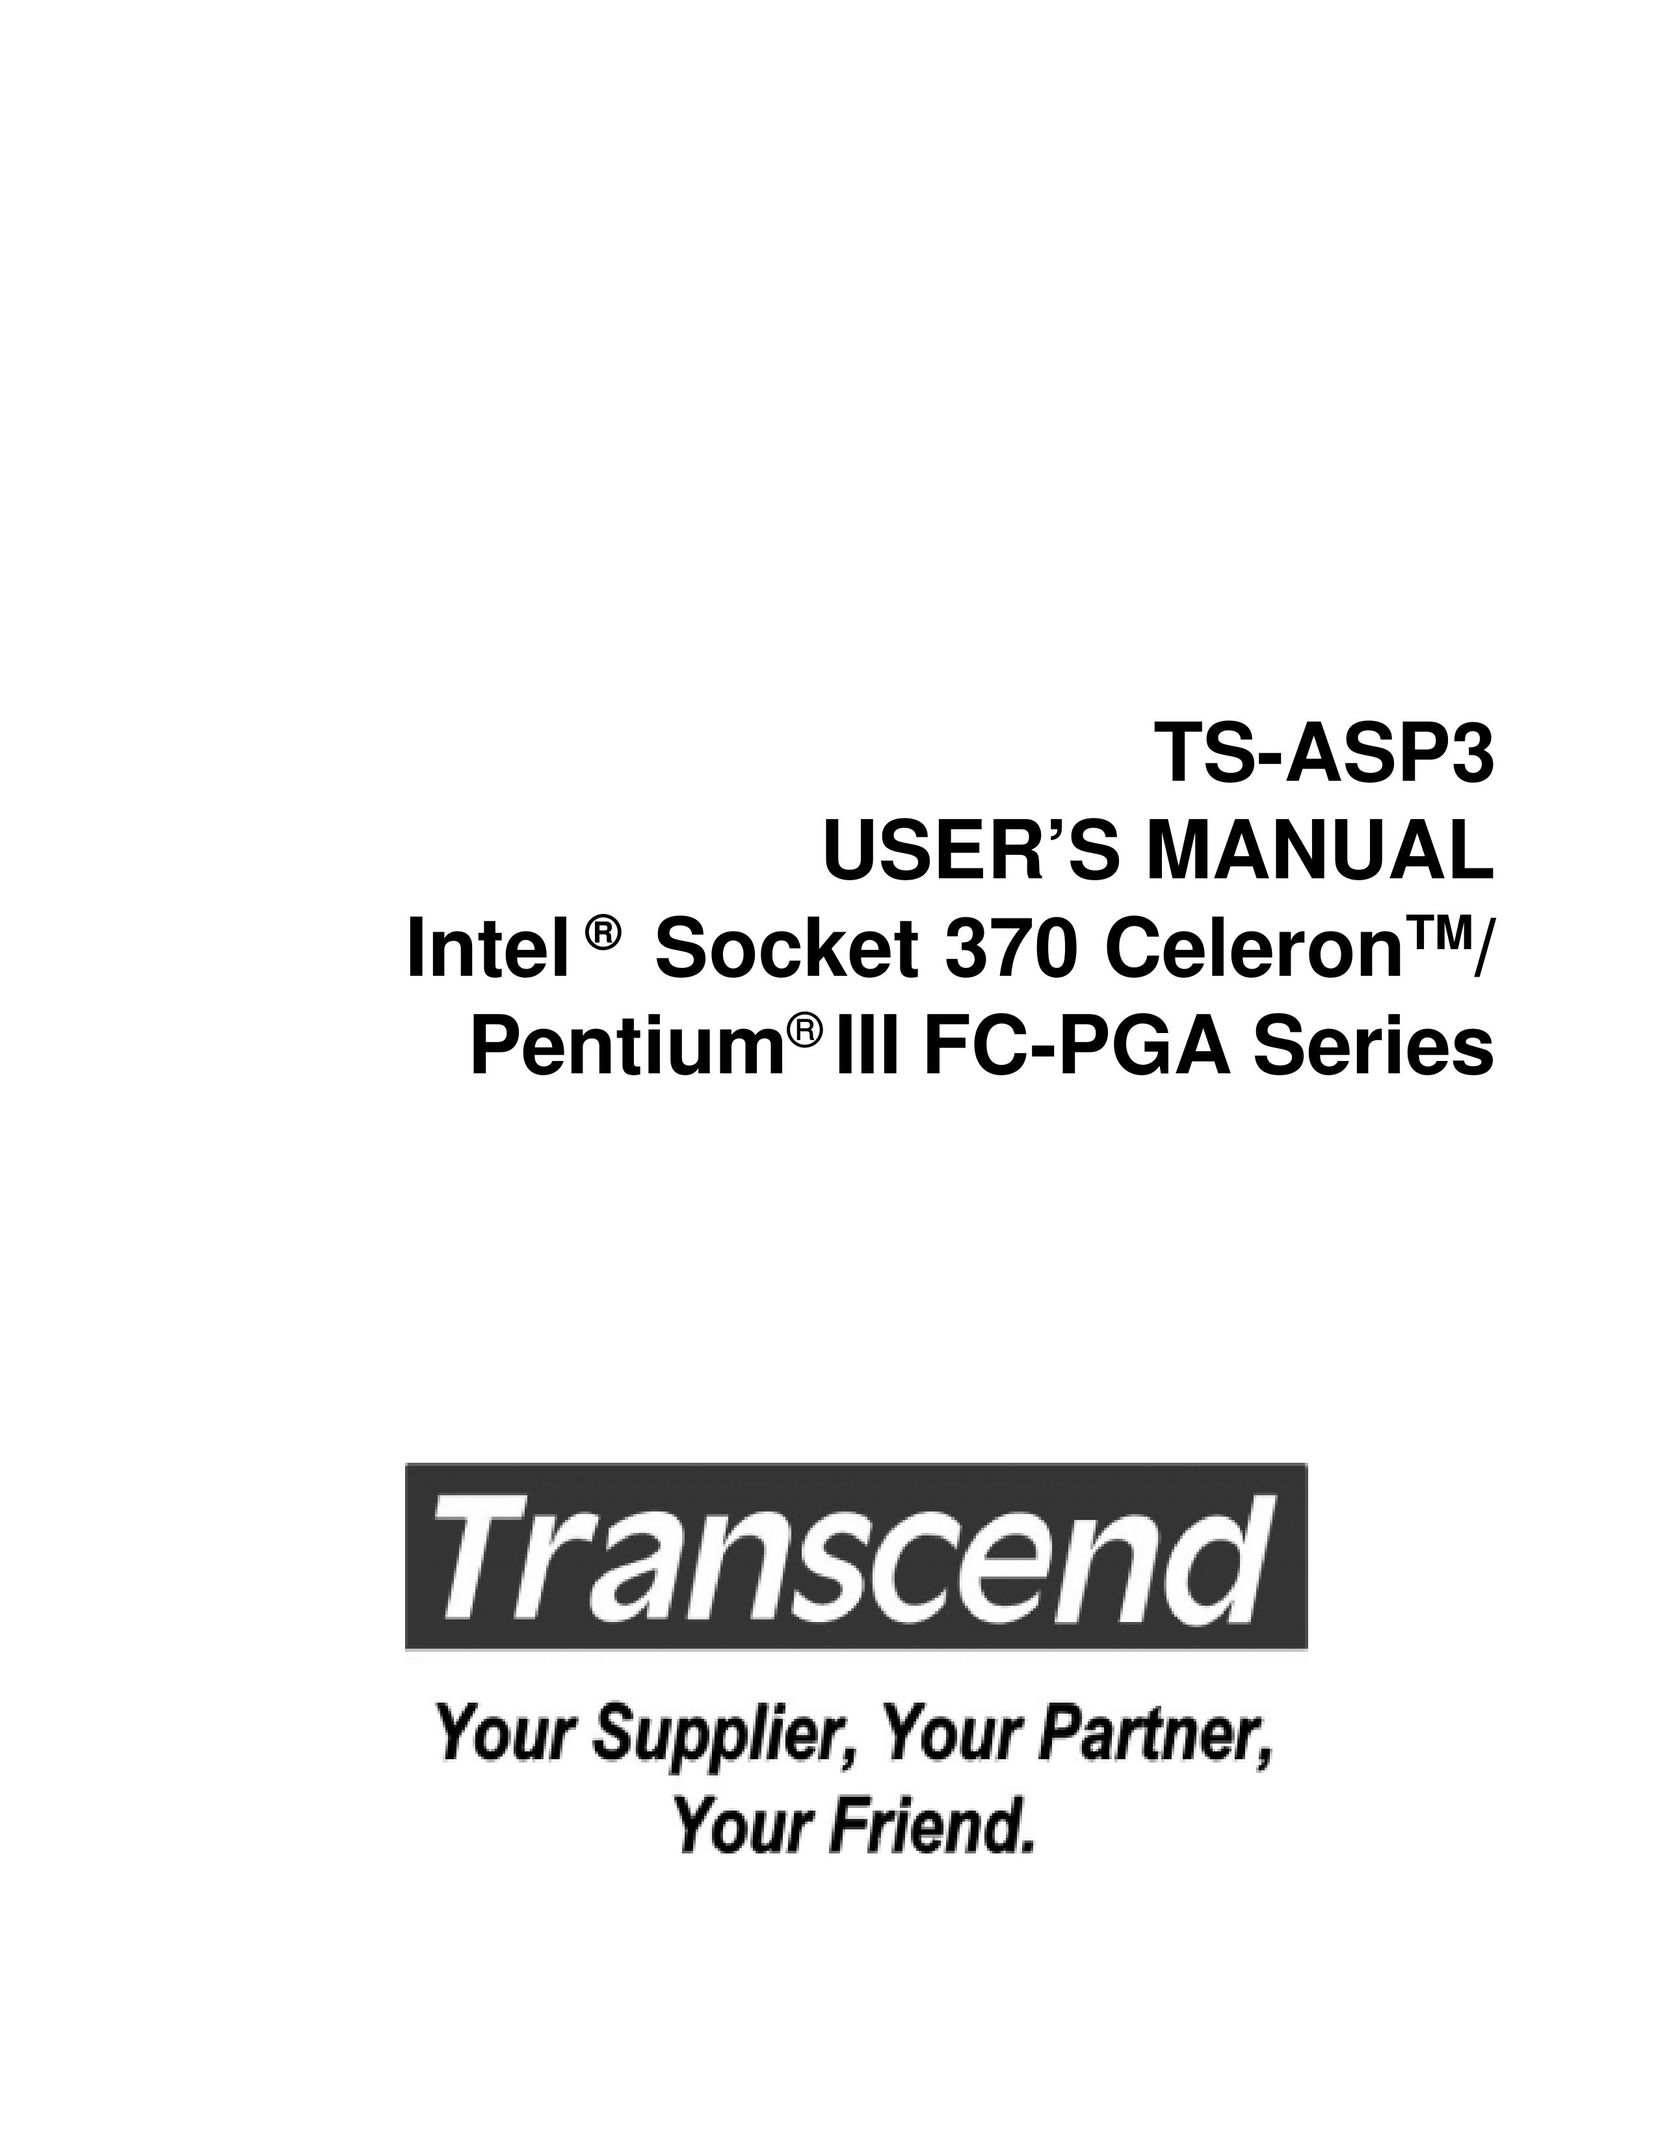 Intel TS-ASP3 Personal Computer User Manual